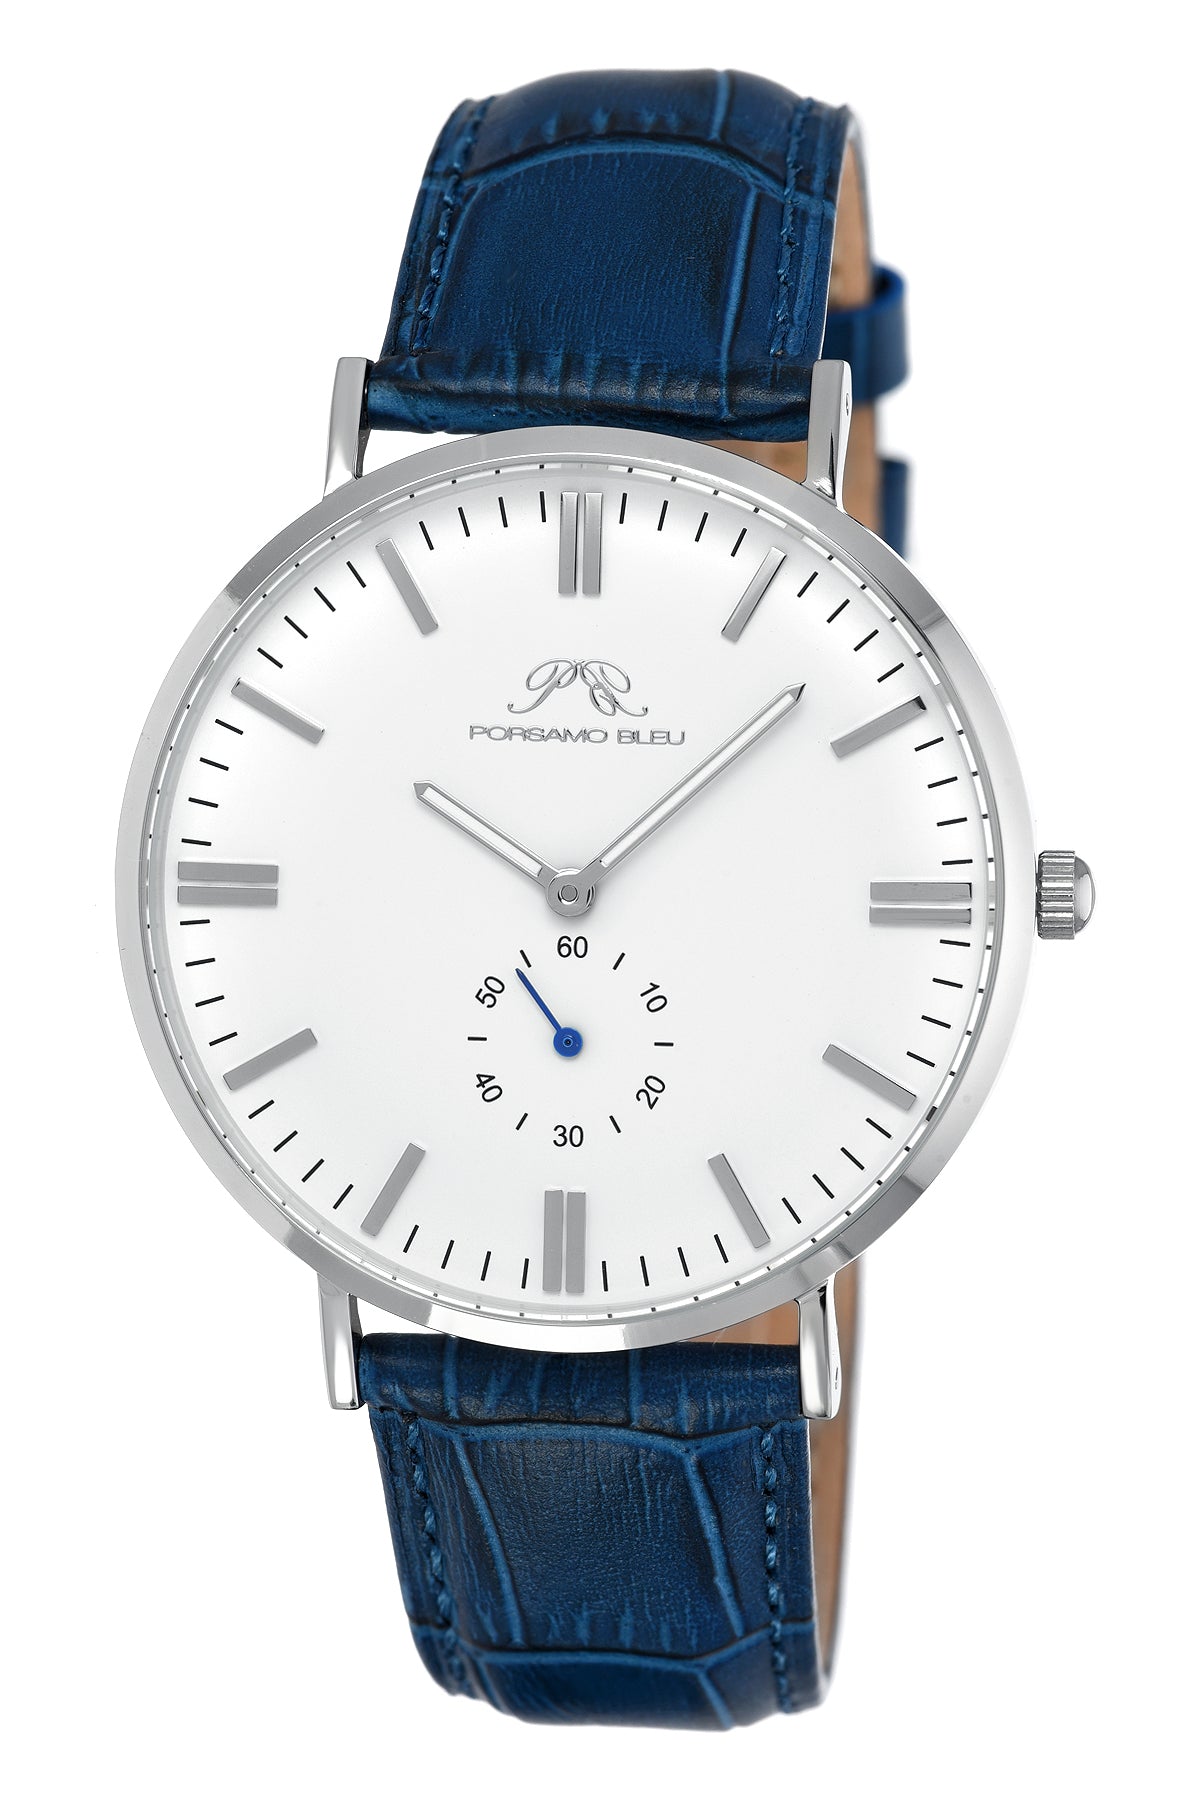 Porsamo Bleu Henry luxury men's watch, genuine leather band, silver, blue, white 841BHEL